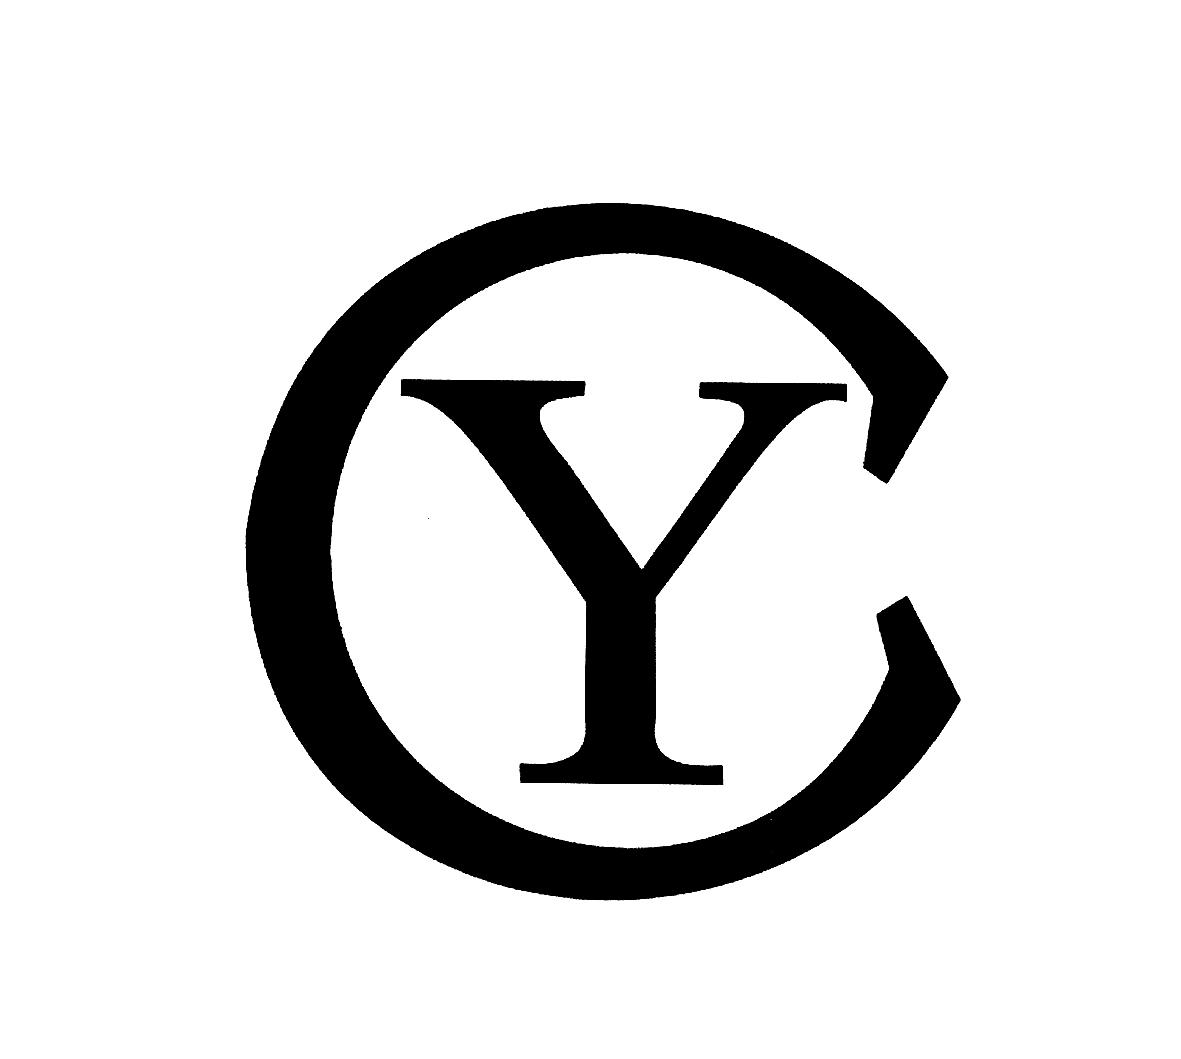 yc字母公司logo图片